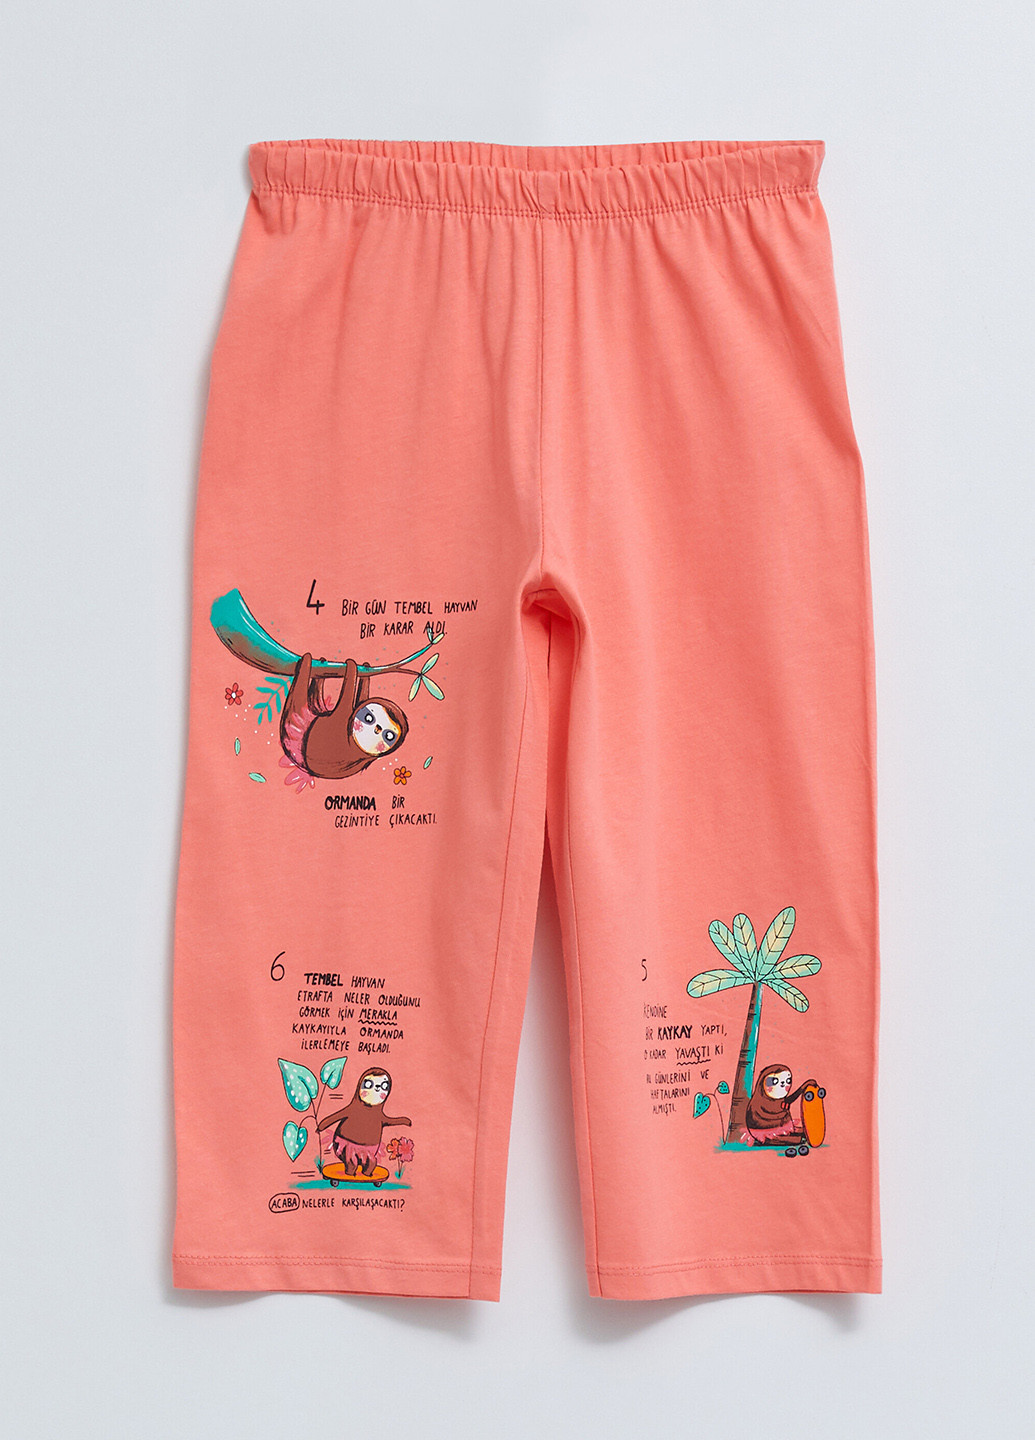 Коралловая всесезон пижама (футболка, шорты) футболка + шорты LC Waikiki